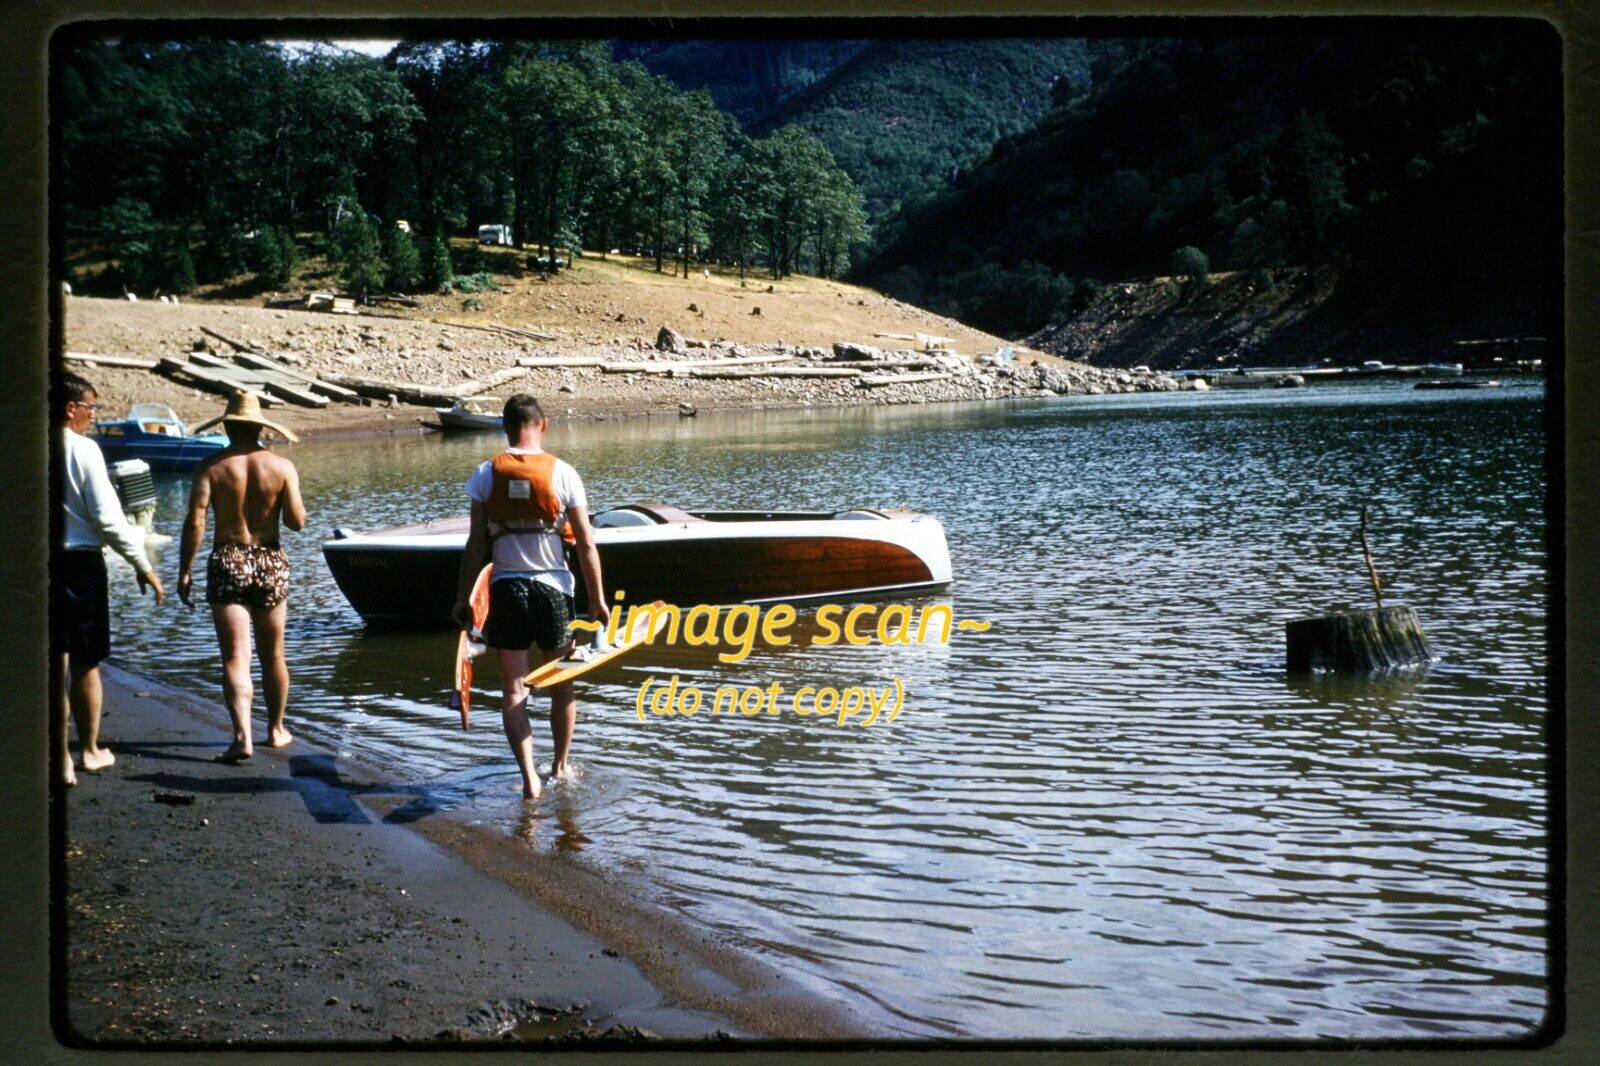 Shasta Lake, California, Man Water Skis Boat in 1961, Kodachrome Slide aa 19-11b